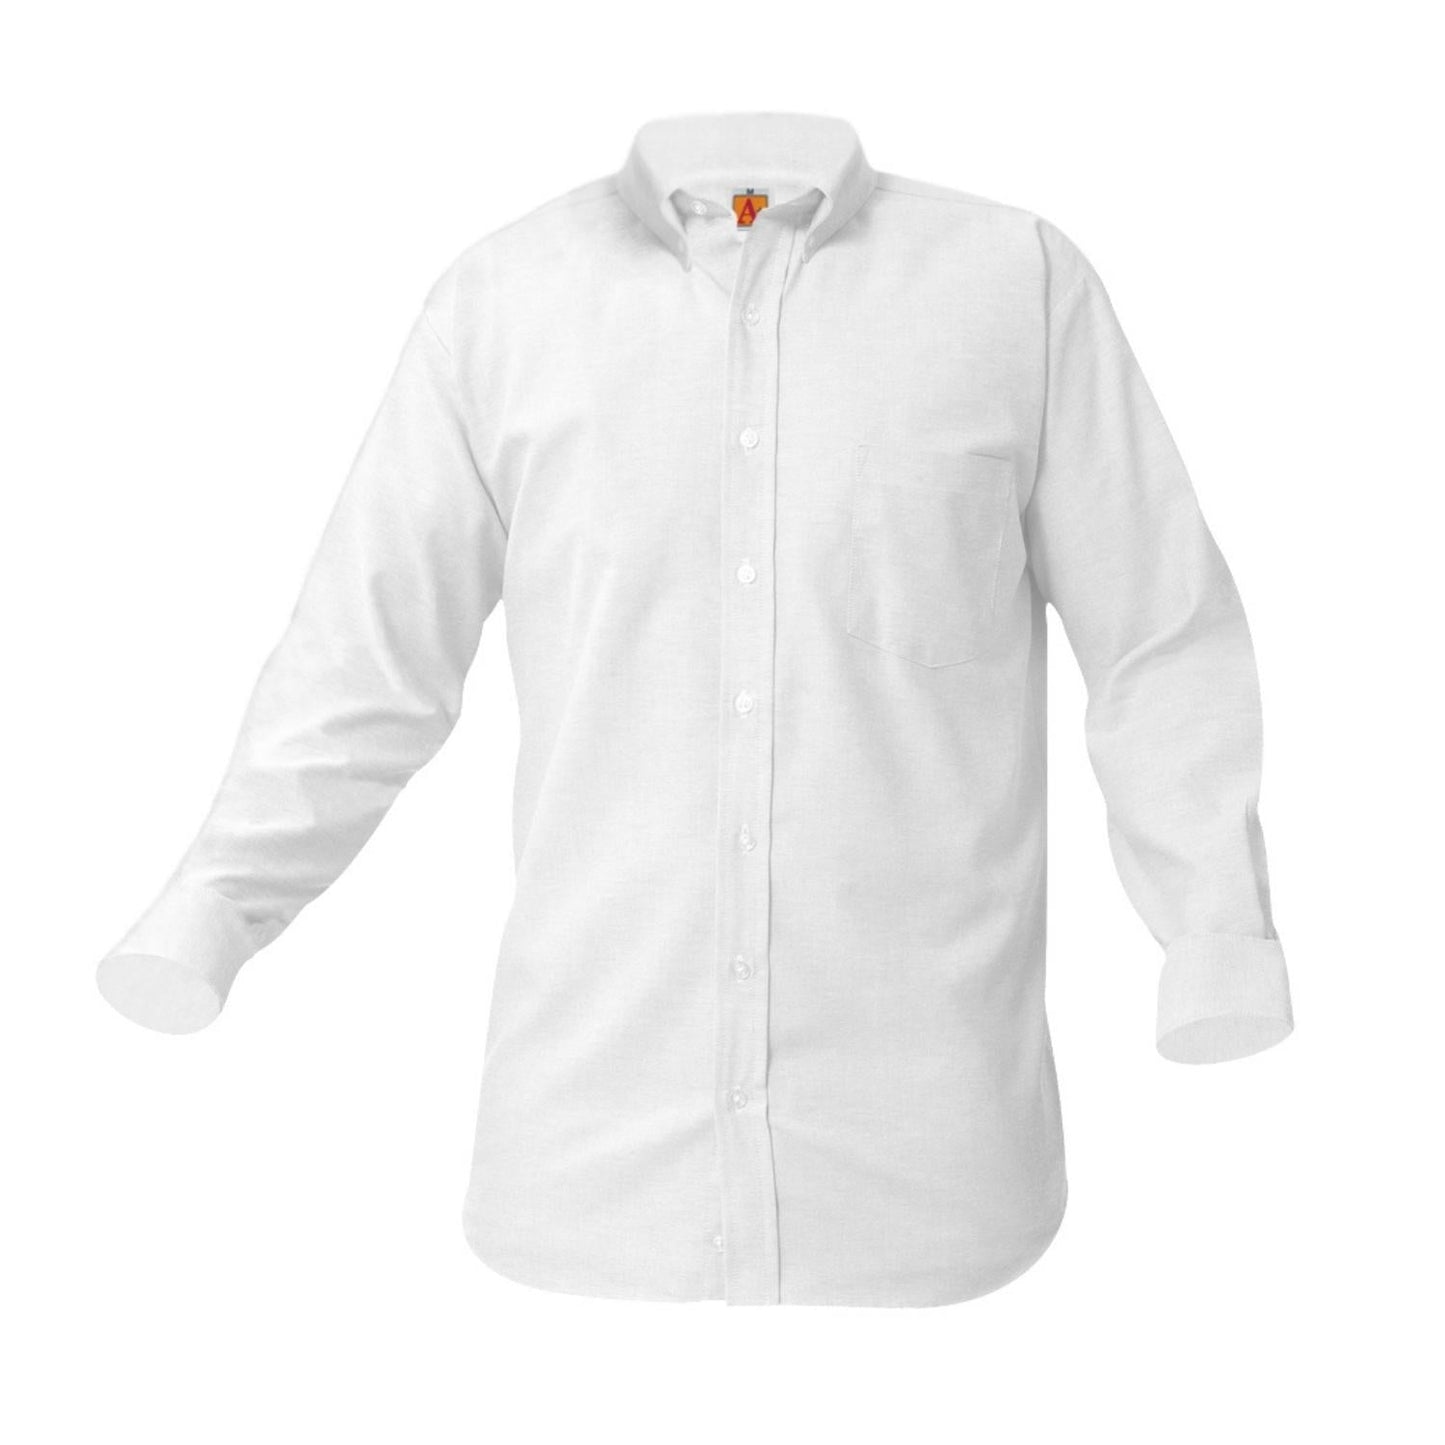 Oxford Long Sleeve Shirt (Male) w/Logo - 1101